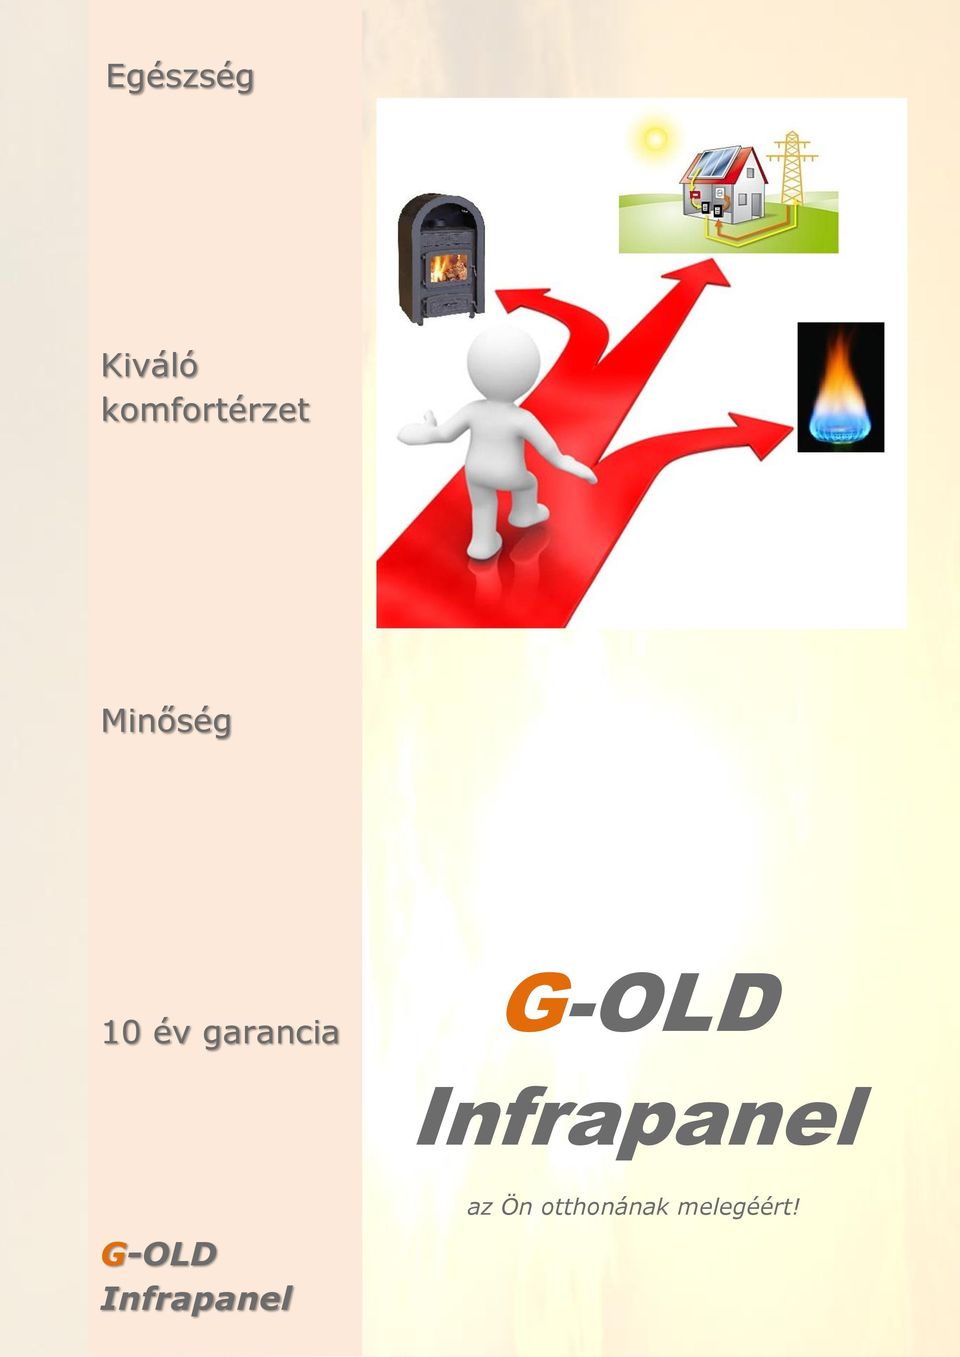 Infrapanel G-OLD Infrapanel